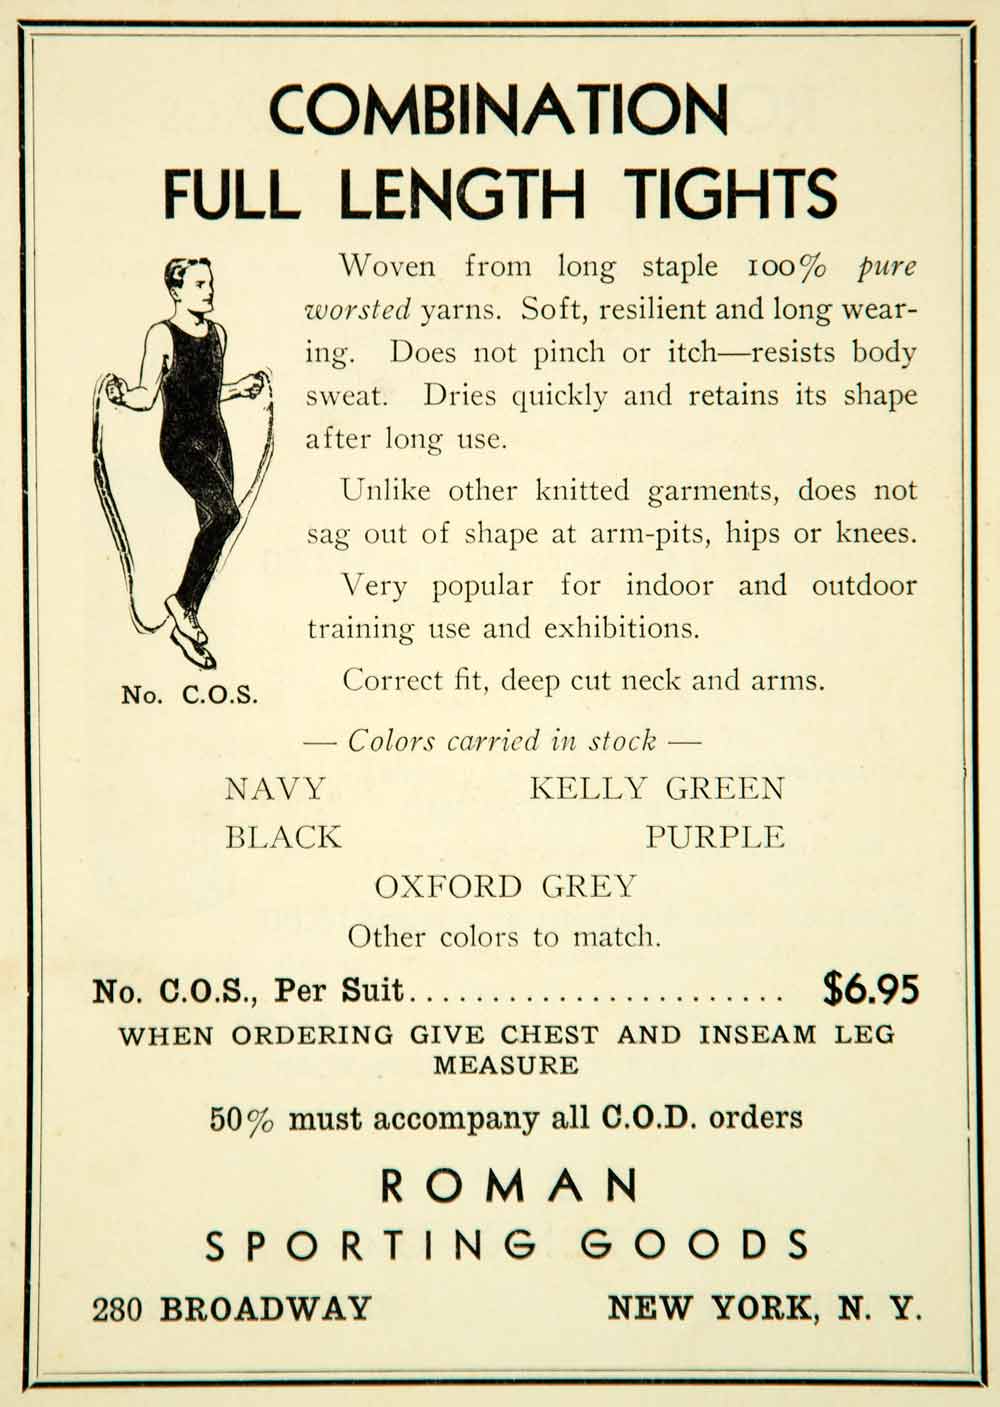 1936 Ad Roman Sporting Goods 280 Broadway NY Mens Combination Full Length YPBR1